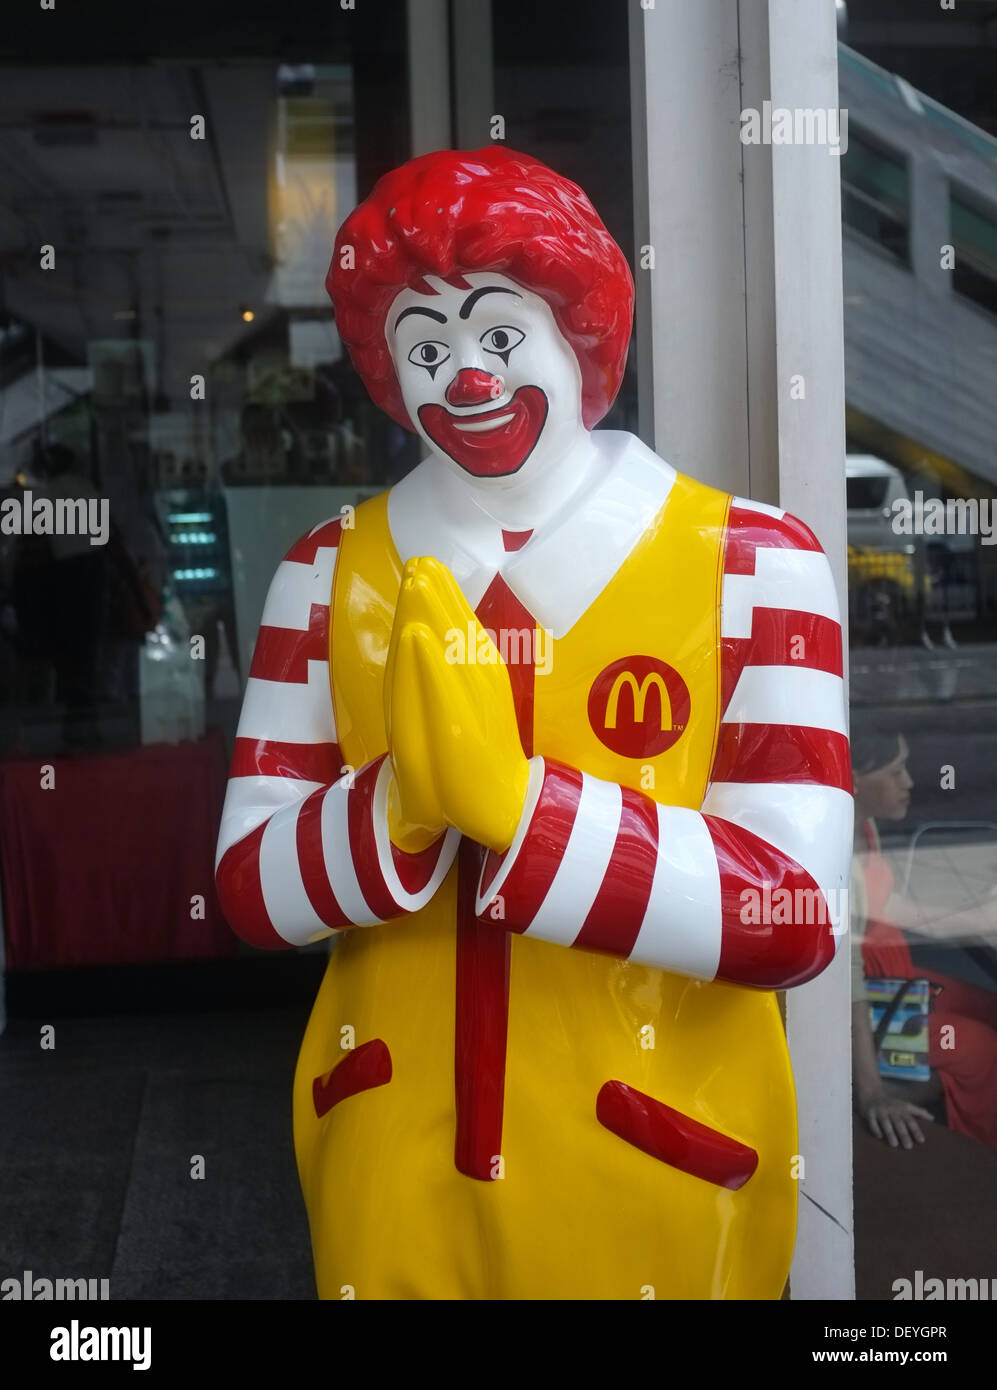 Ronald McDonald statue makes a 'wai' gesure outside a McDonald's in Bangkok, Thailand Stock Photo